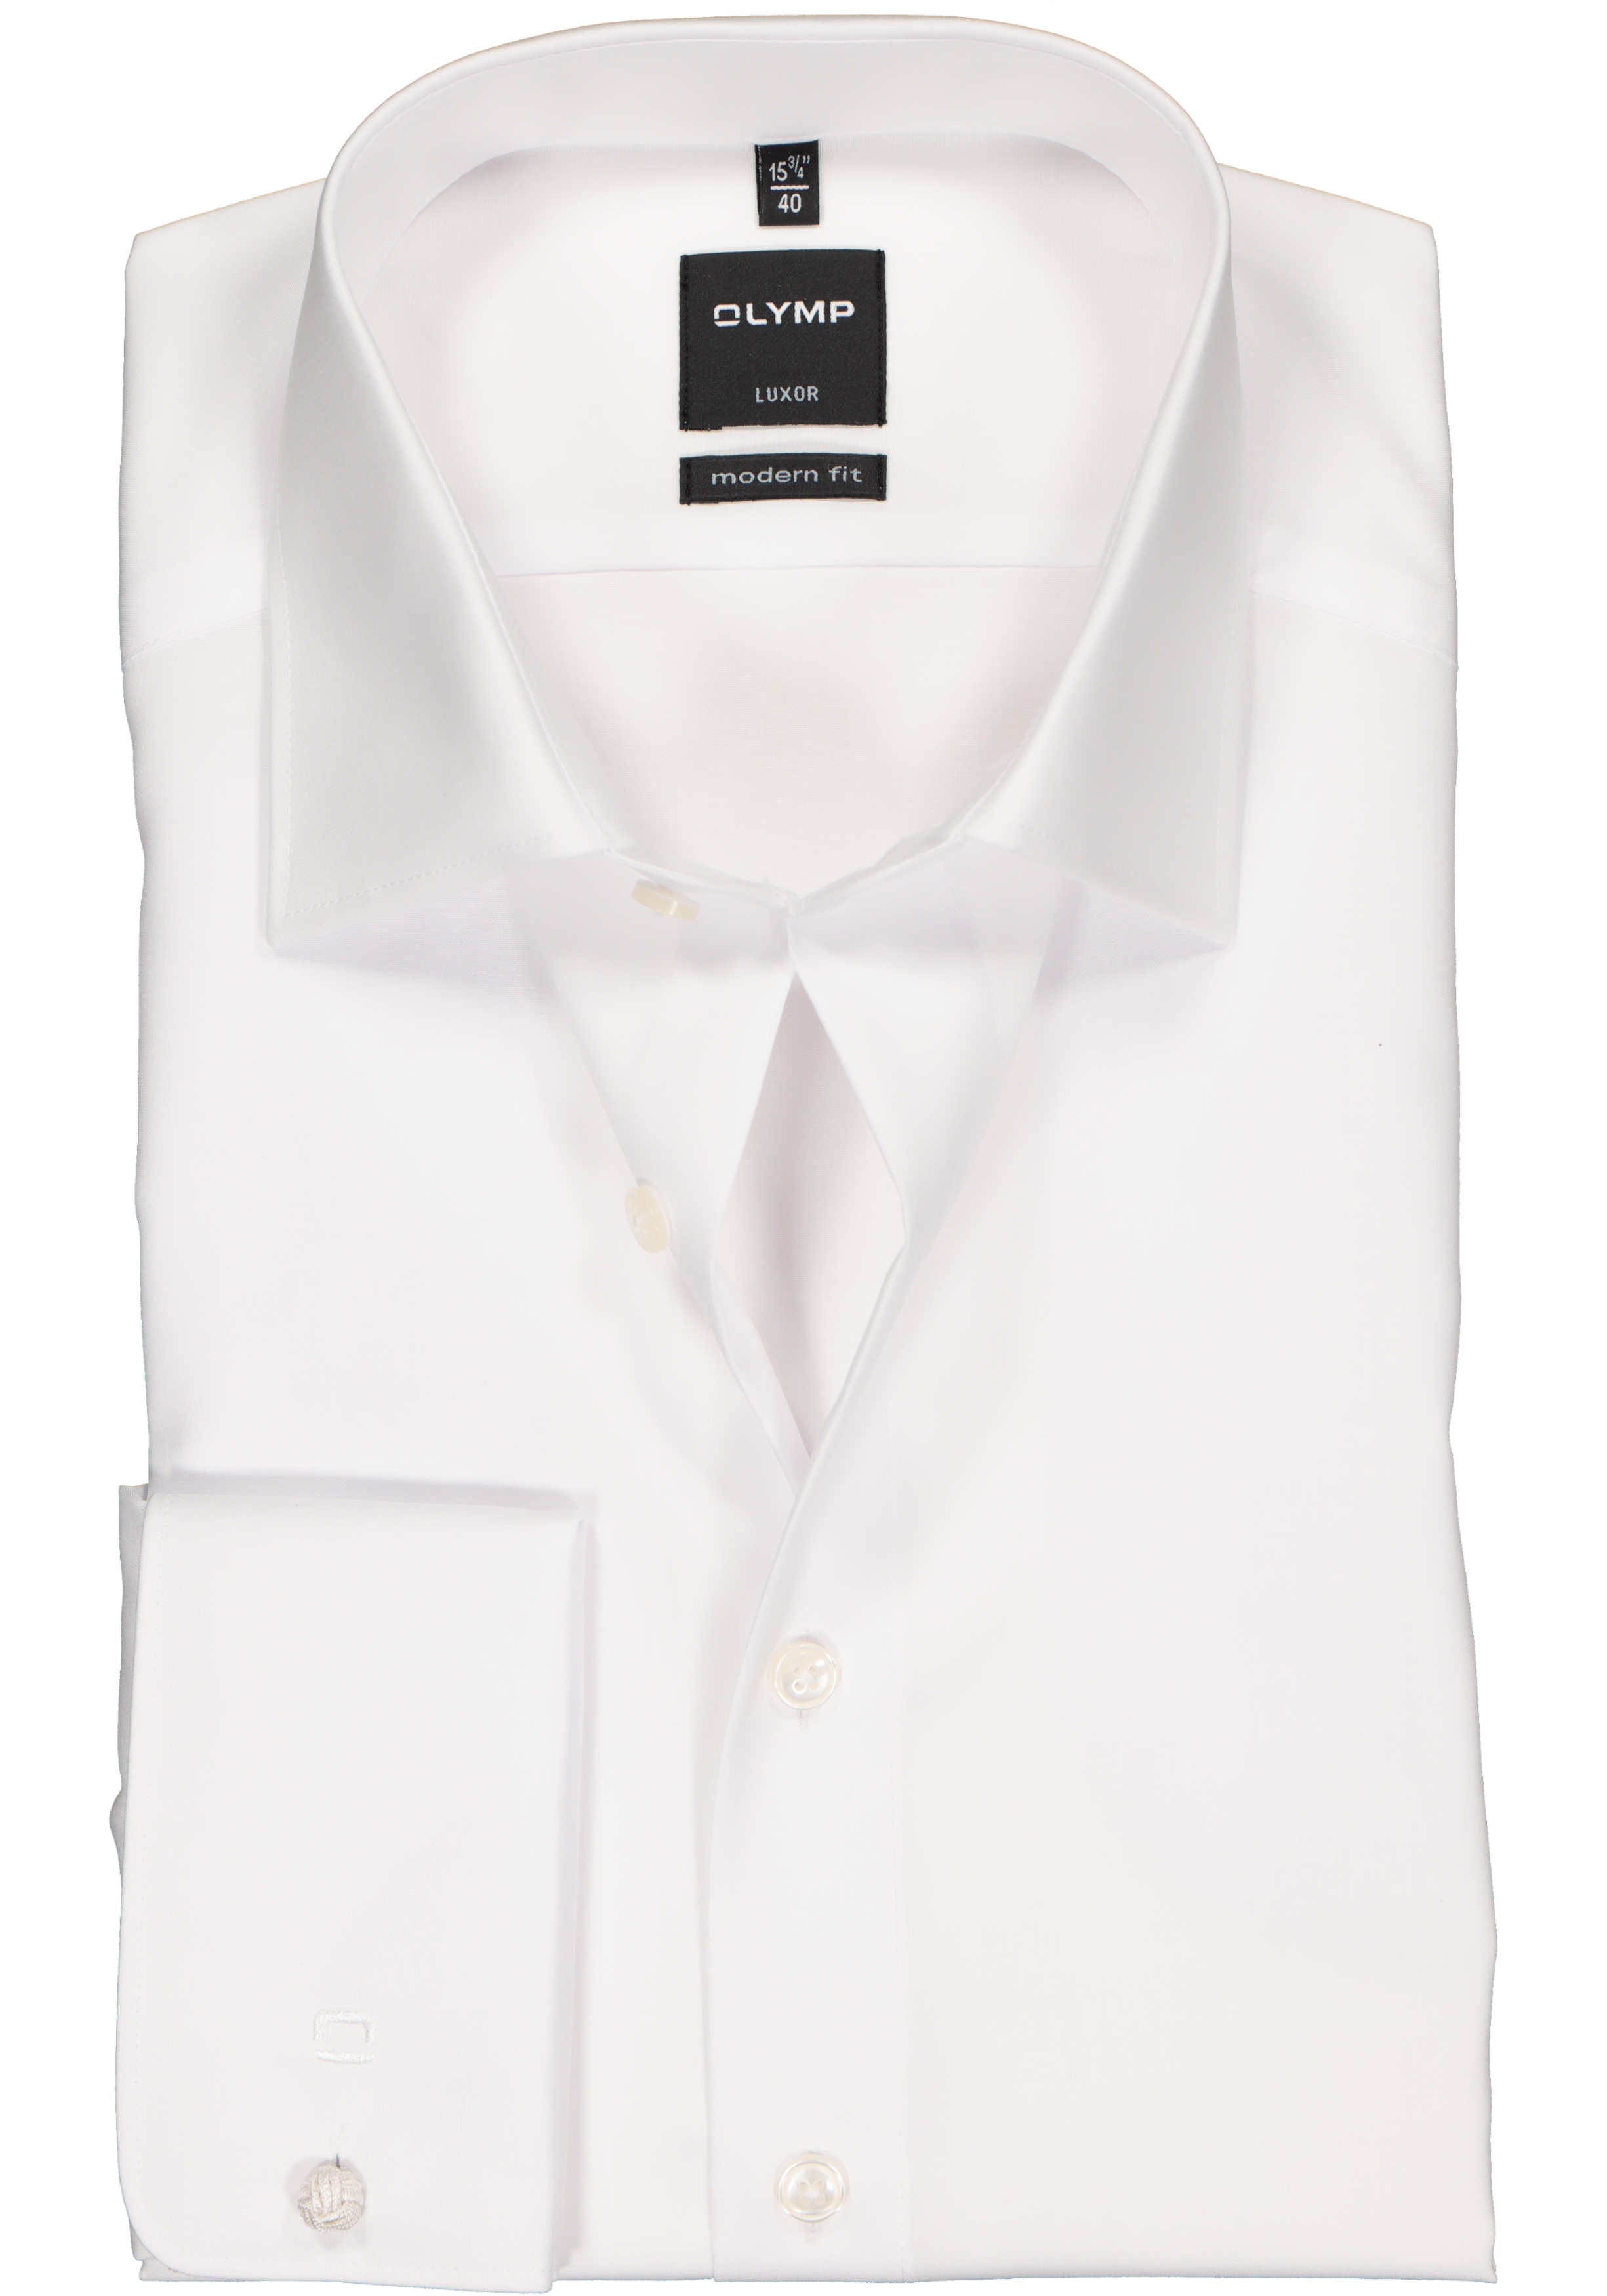 OLYMP Luxor modern fit overhemd, dubbele manchet, wit